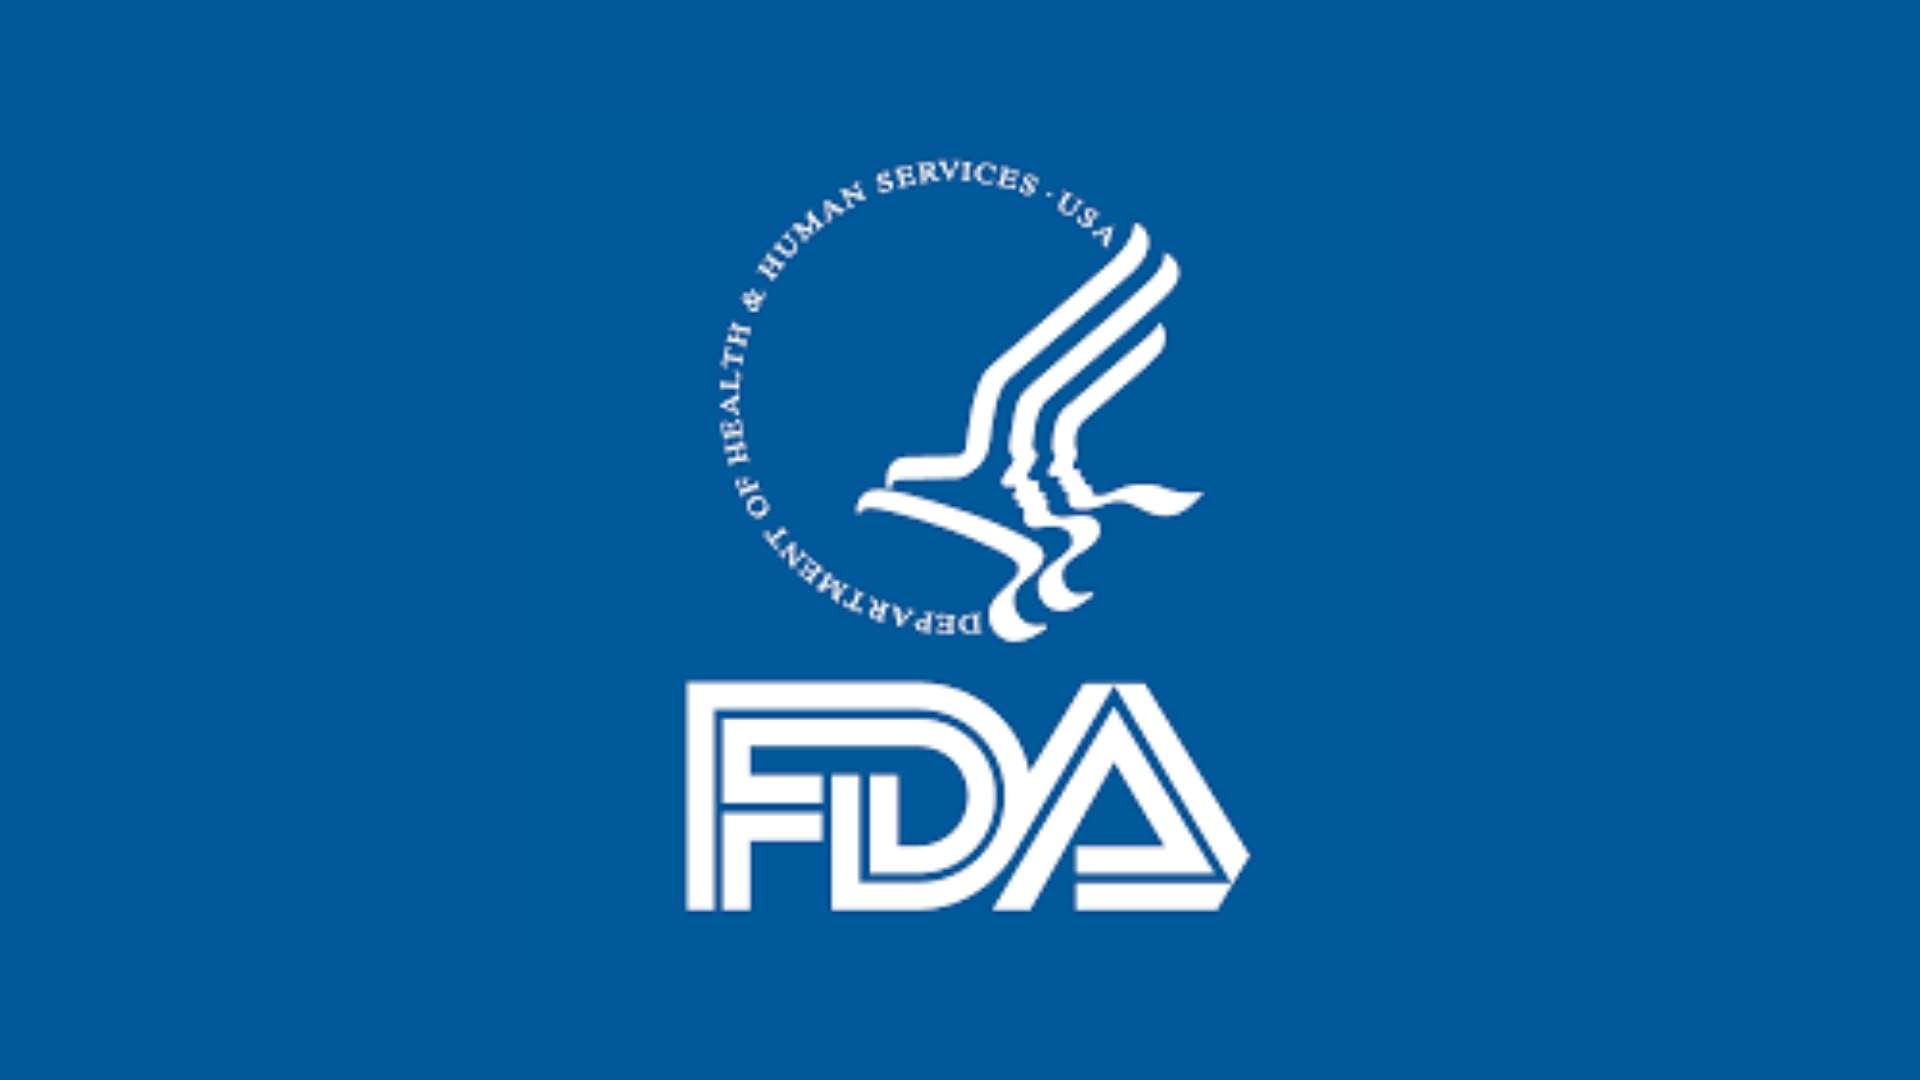 Panduan Draf FDA tentang Perangkat PBM: Perbandingan Predikat dan Pelabelan